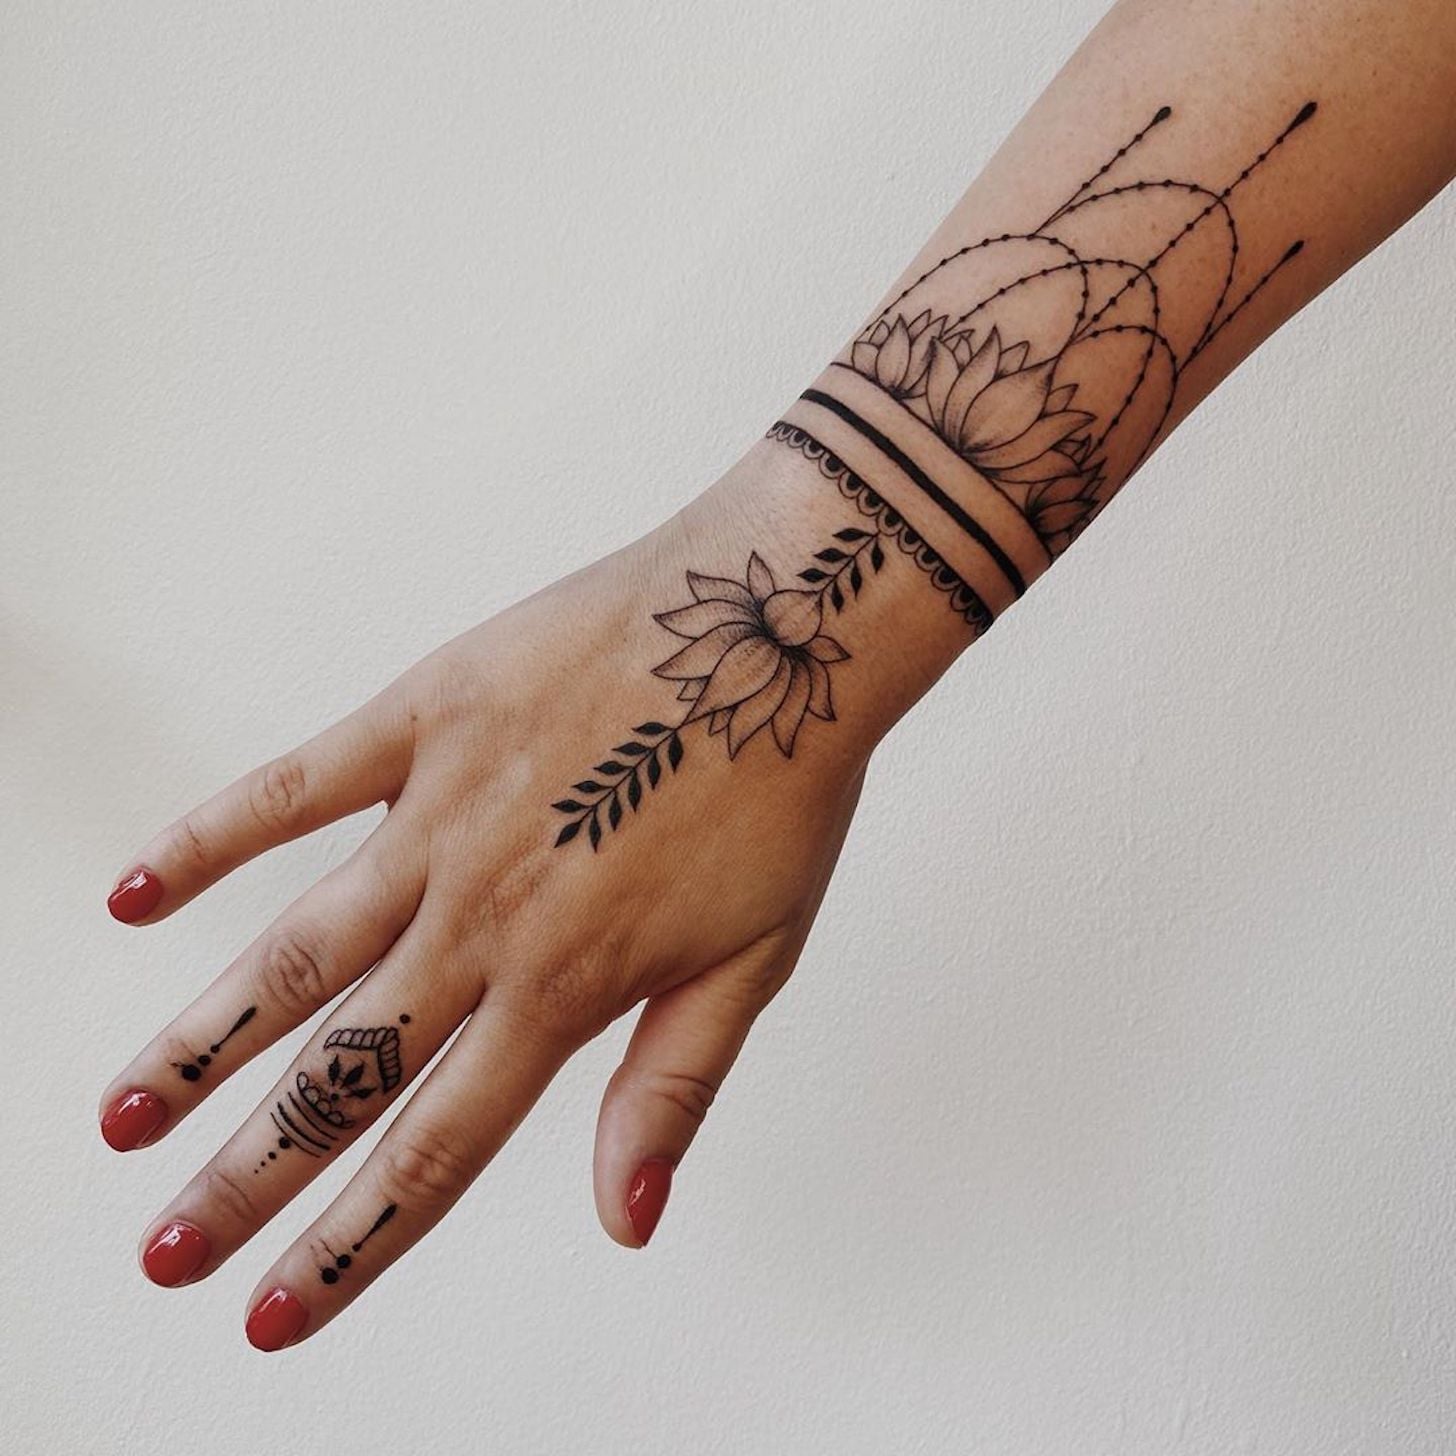 Pin on tattooed hands